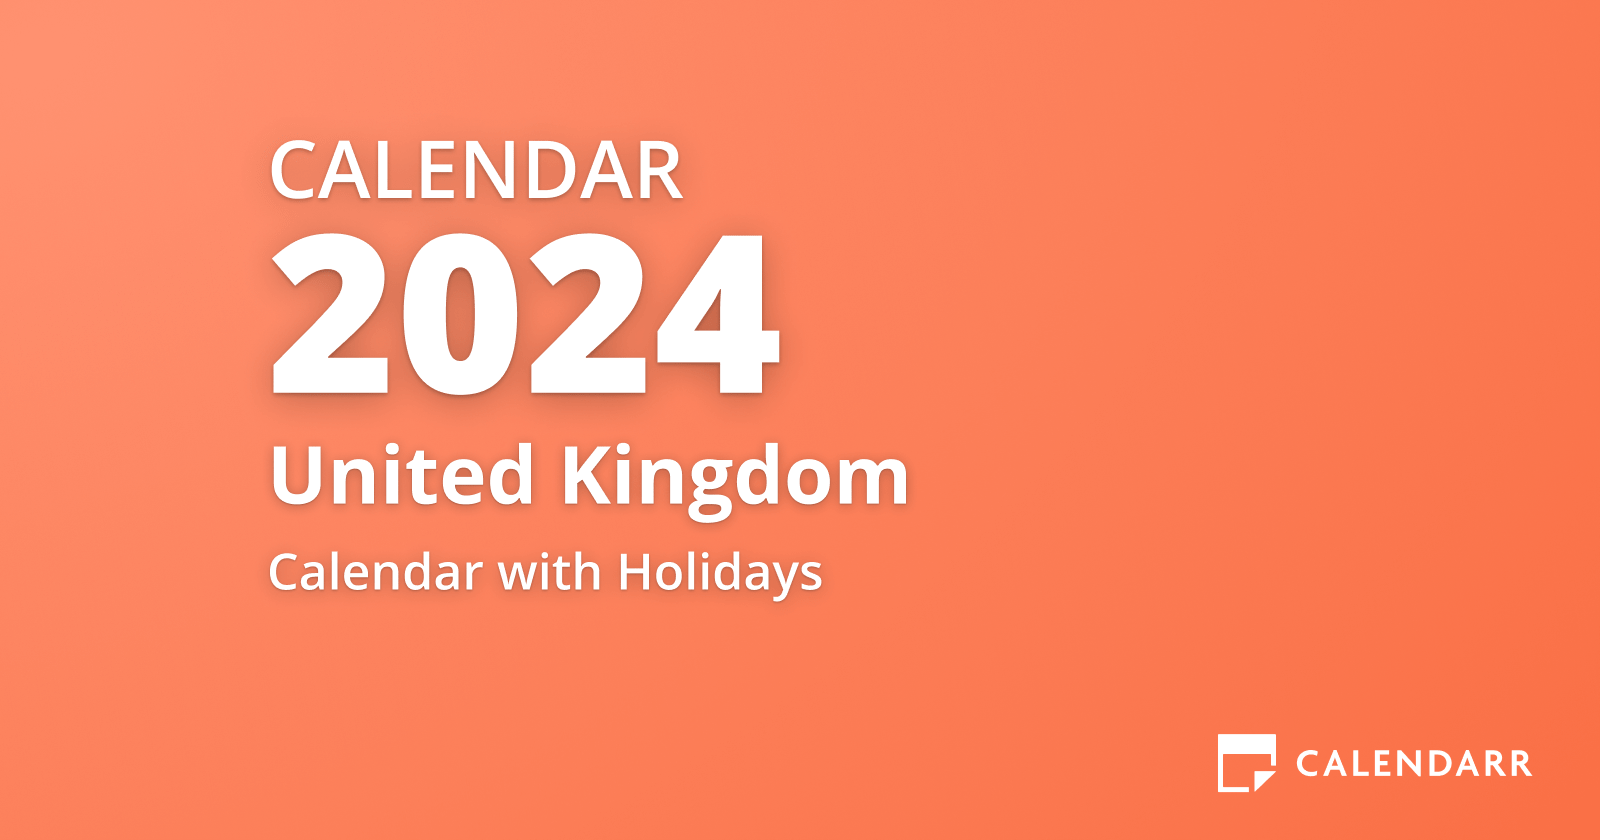 February 2024 Calendar of the United Kingdom (February 2024 Holidays